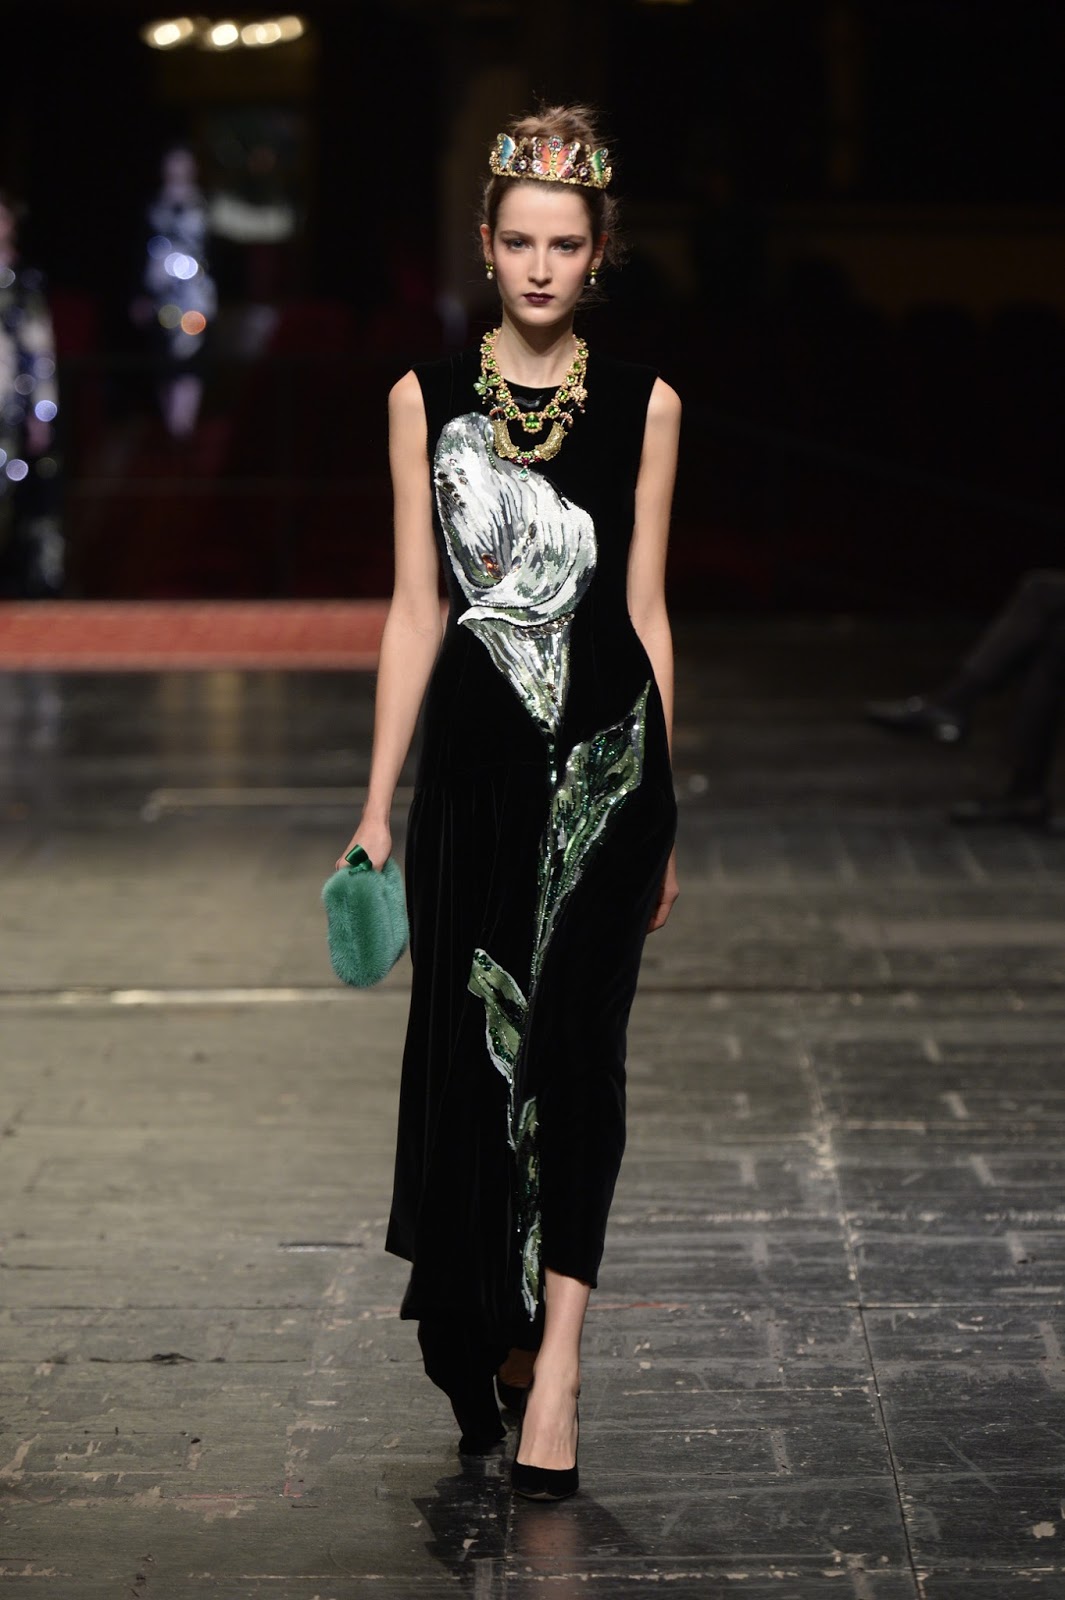 loveisspeed.......: Dolce & Gabbana’s Alta Moda Collection Gets a ...